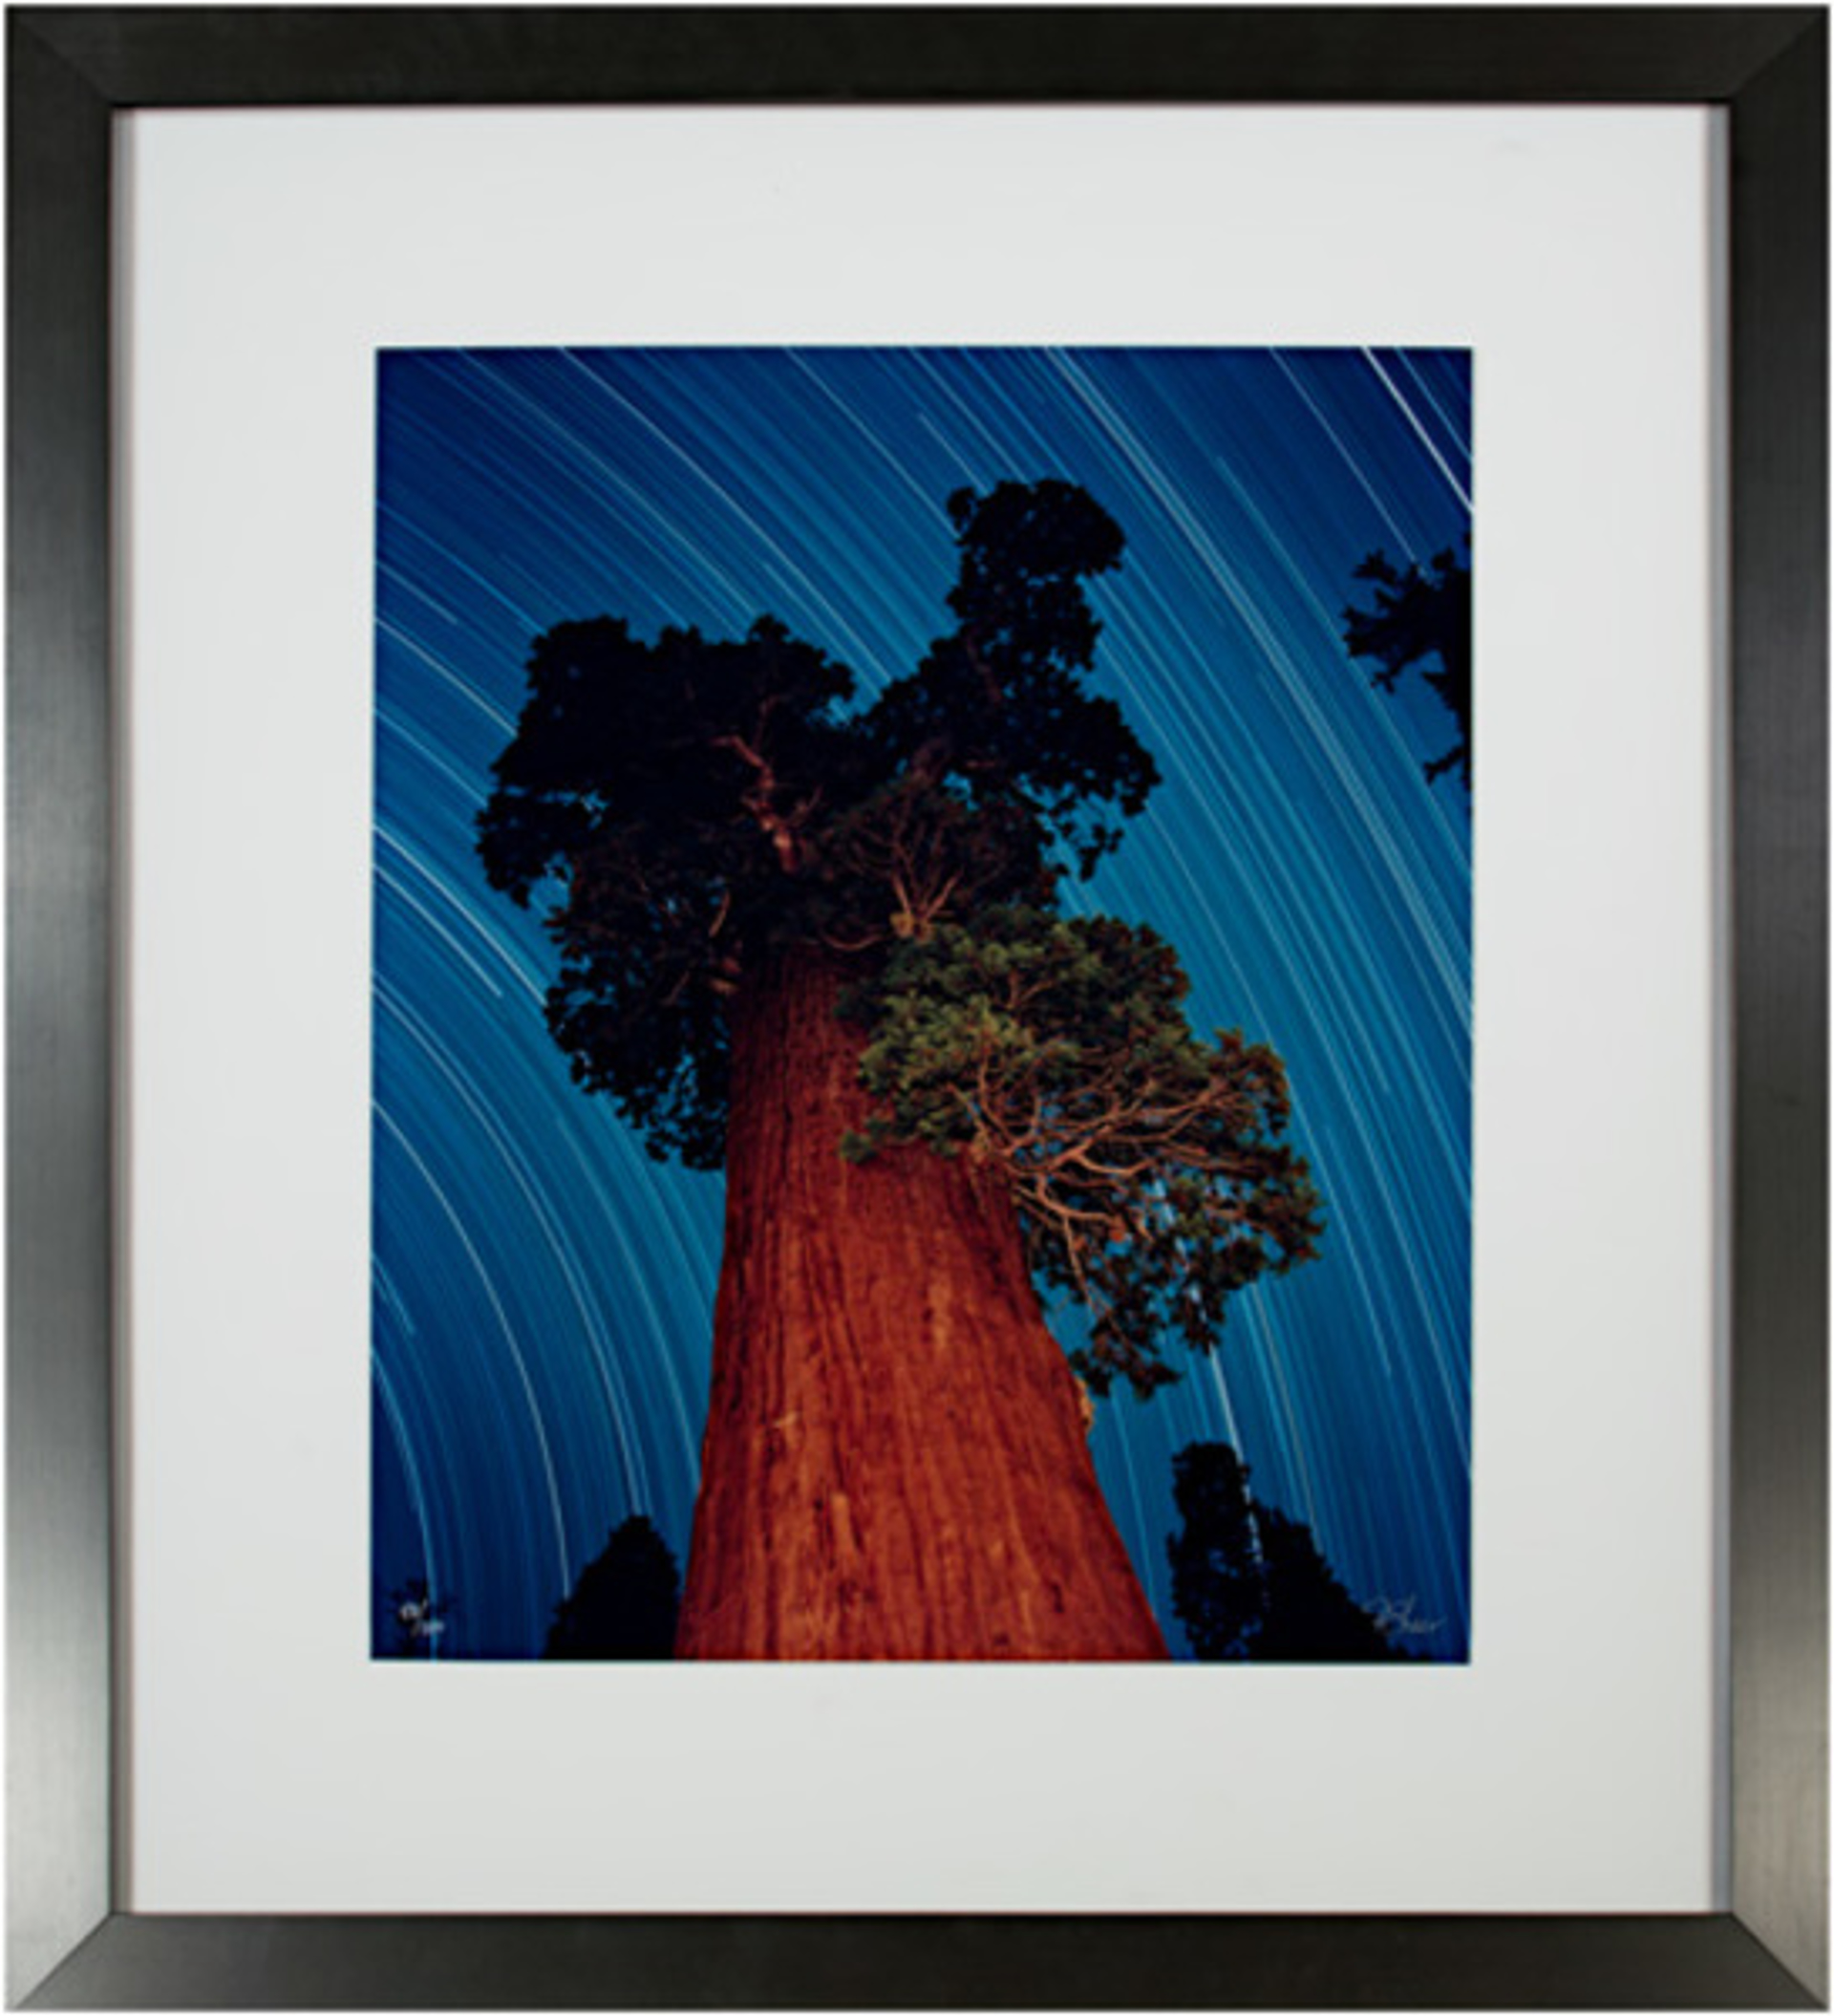 Giant Sequoia Star Trail by Robert Kawika Sheer